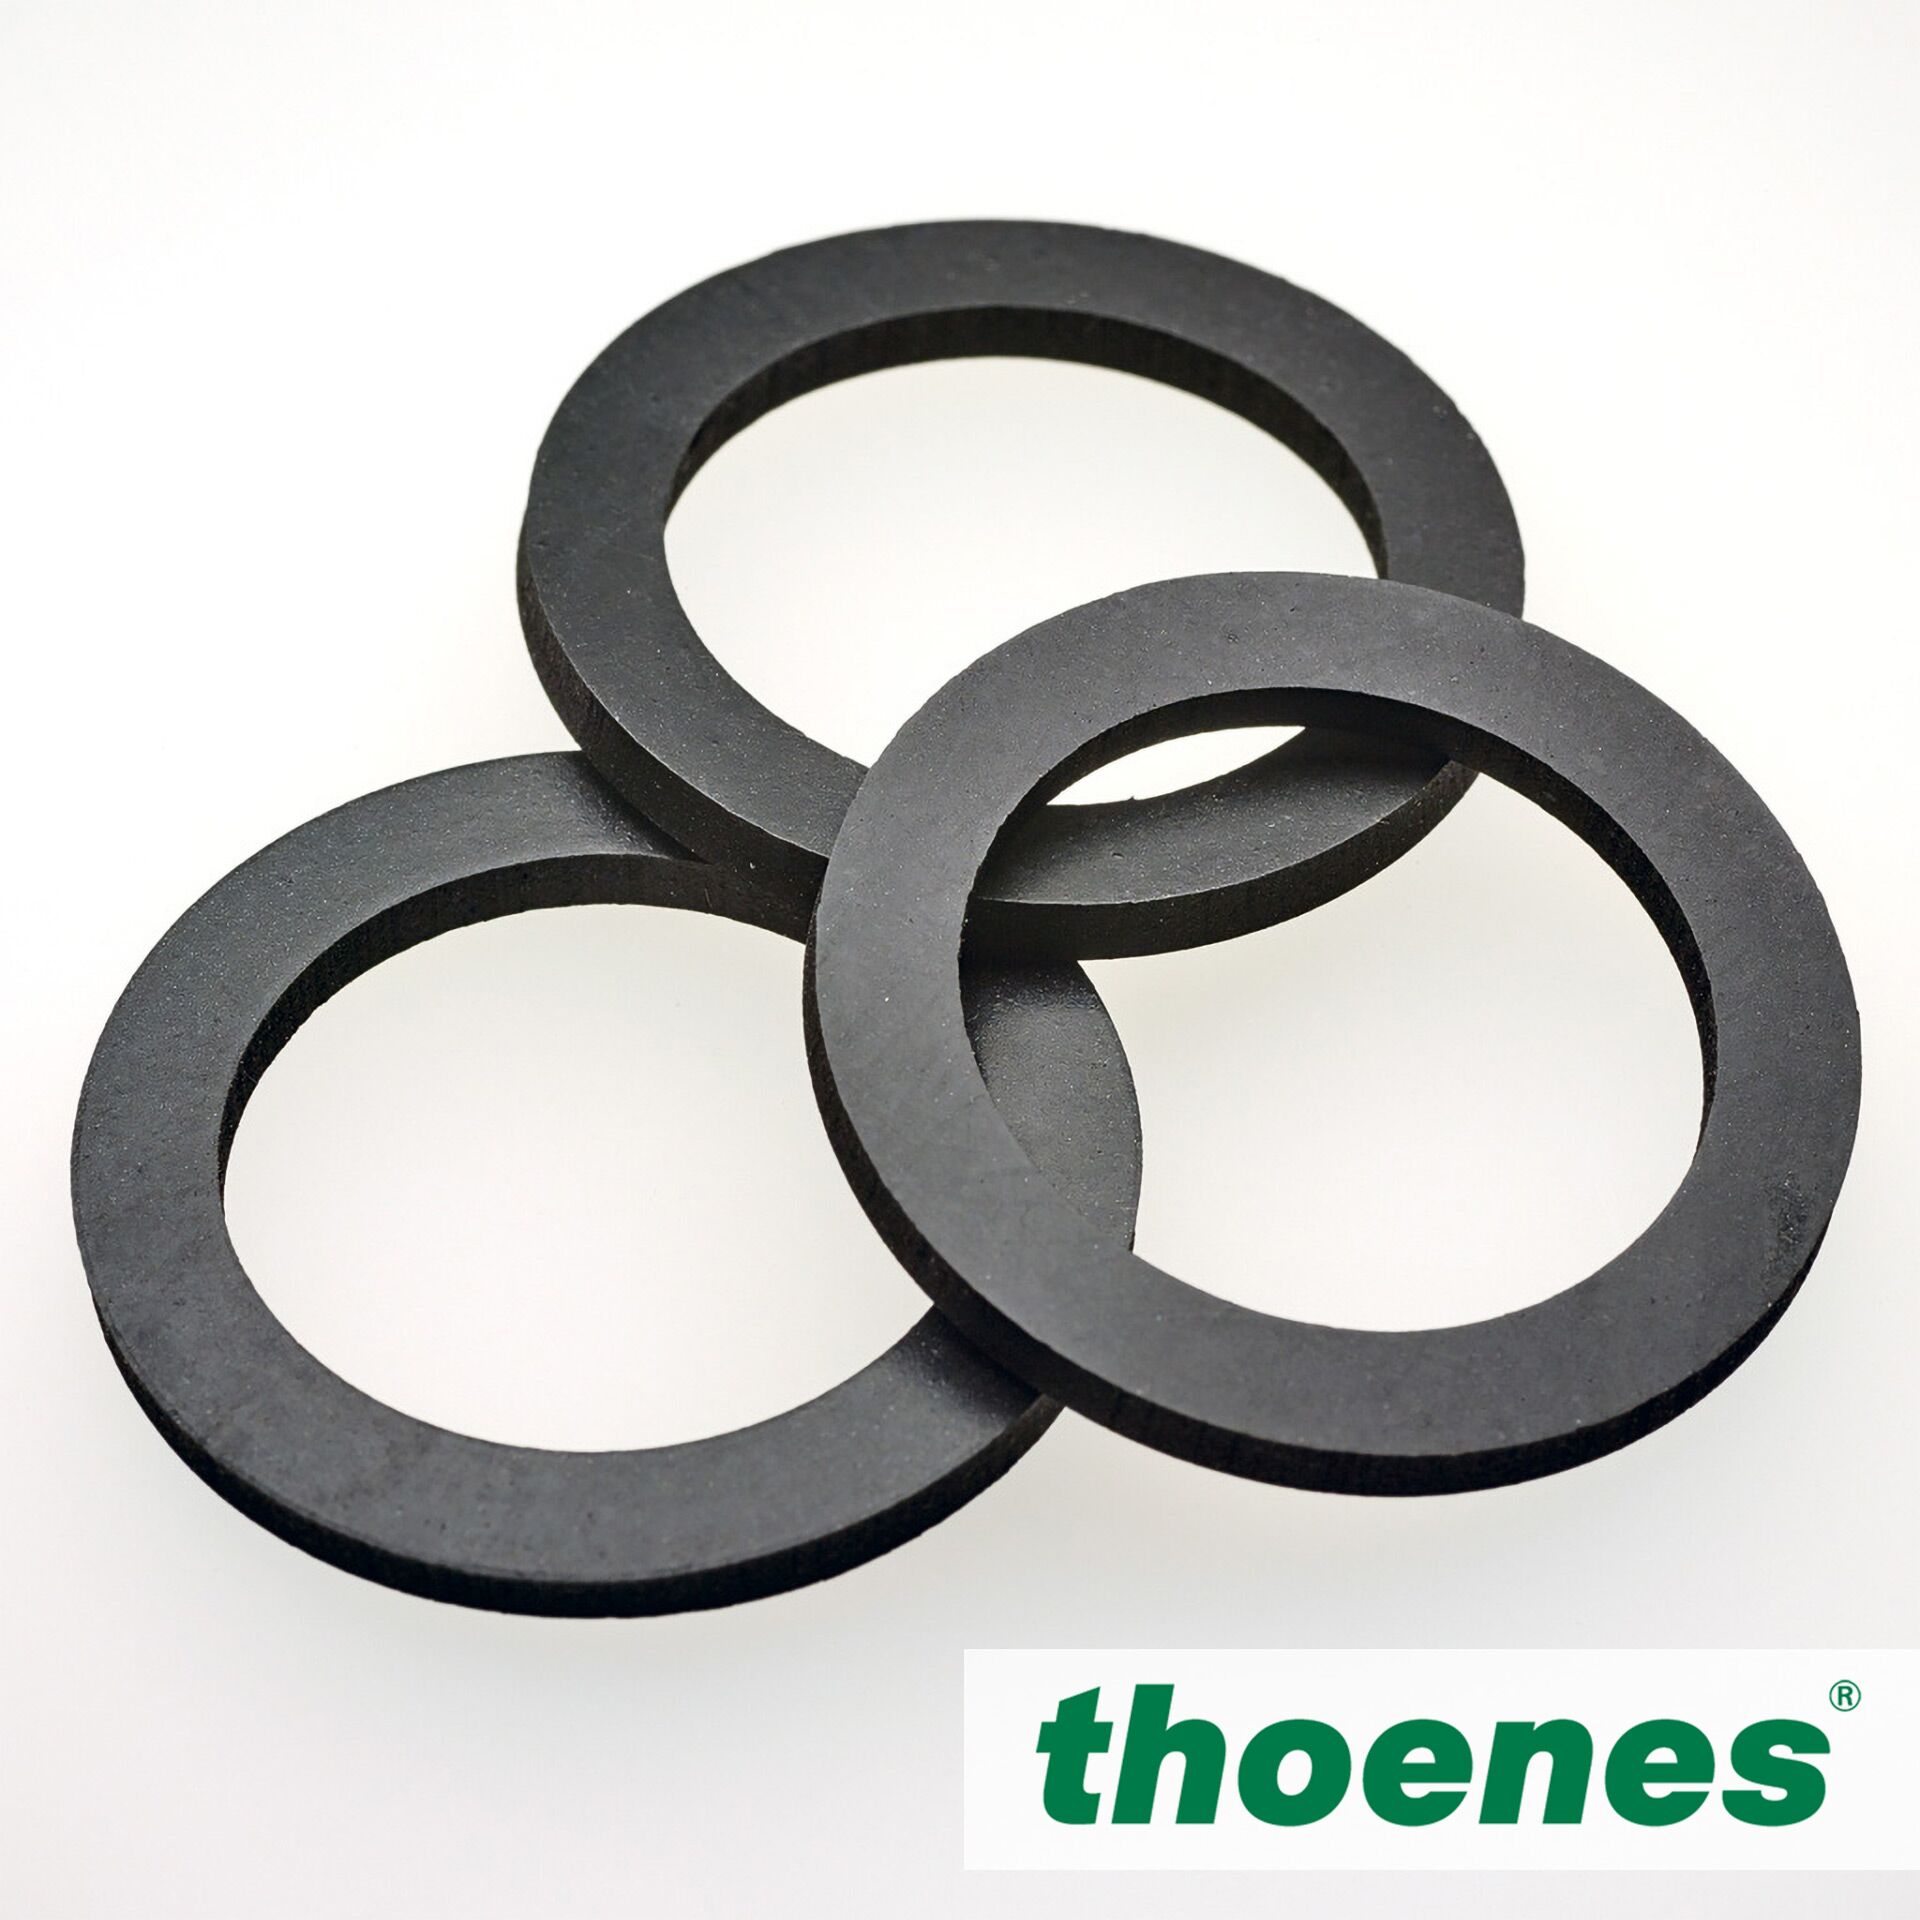 thoenes® NBR gasket material